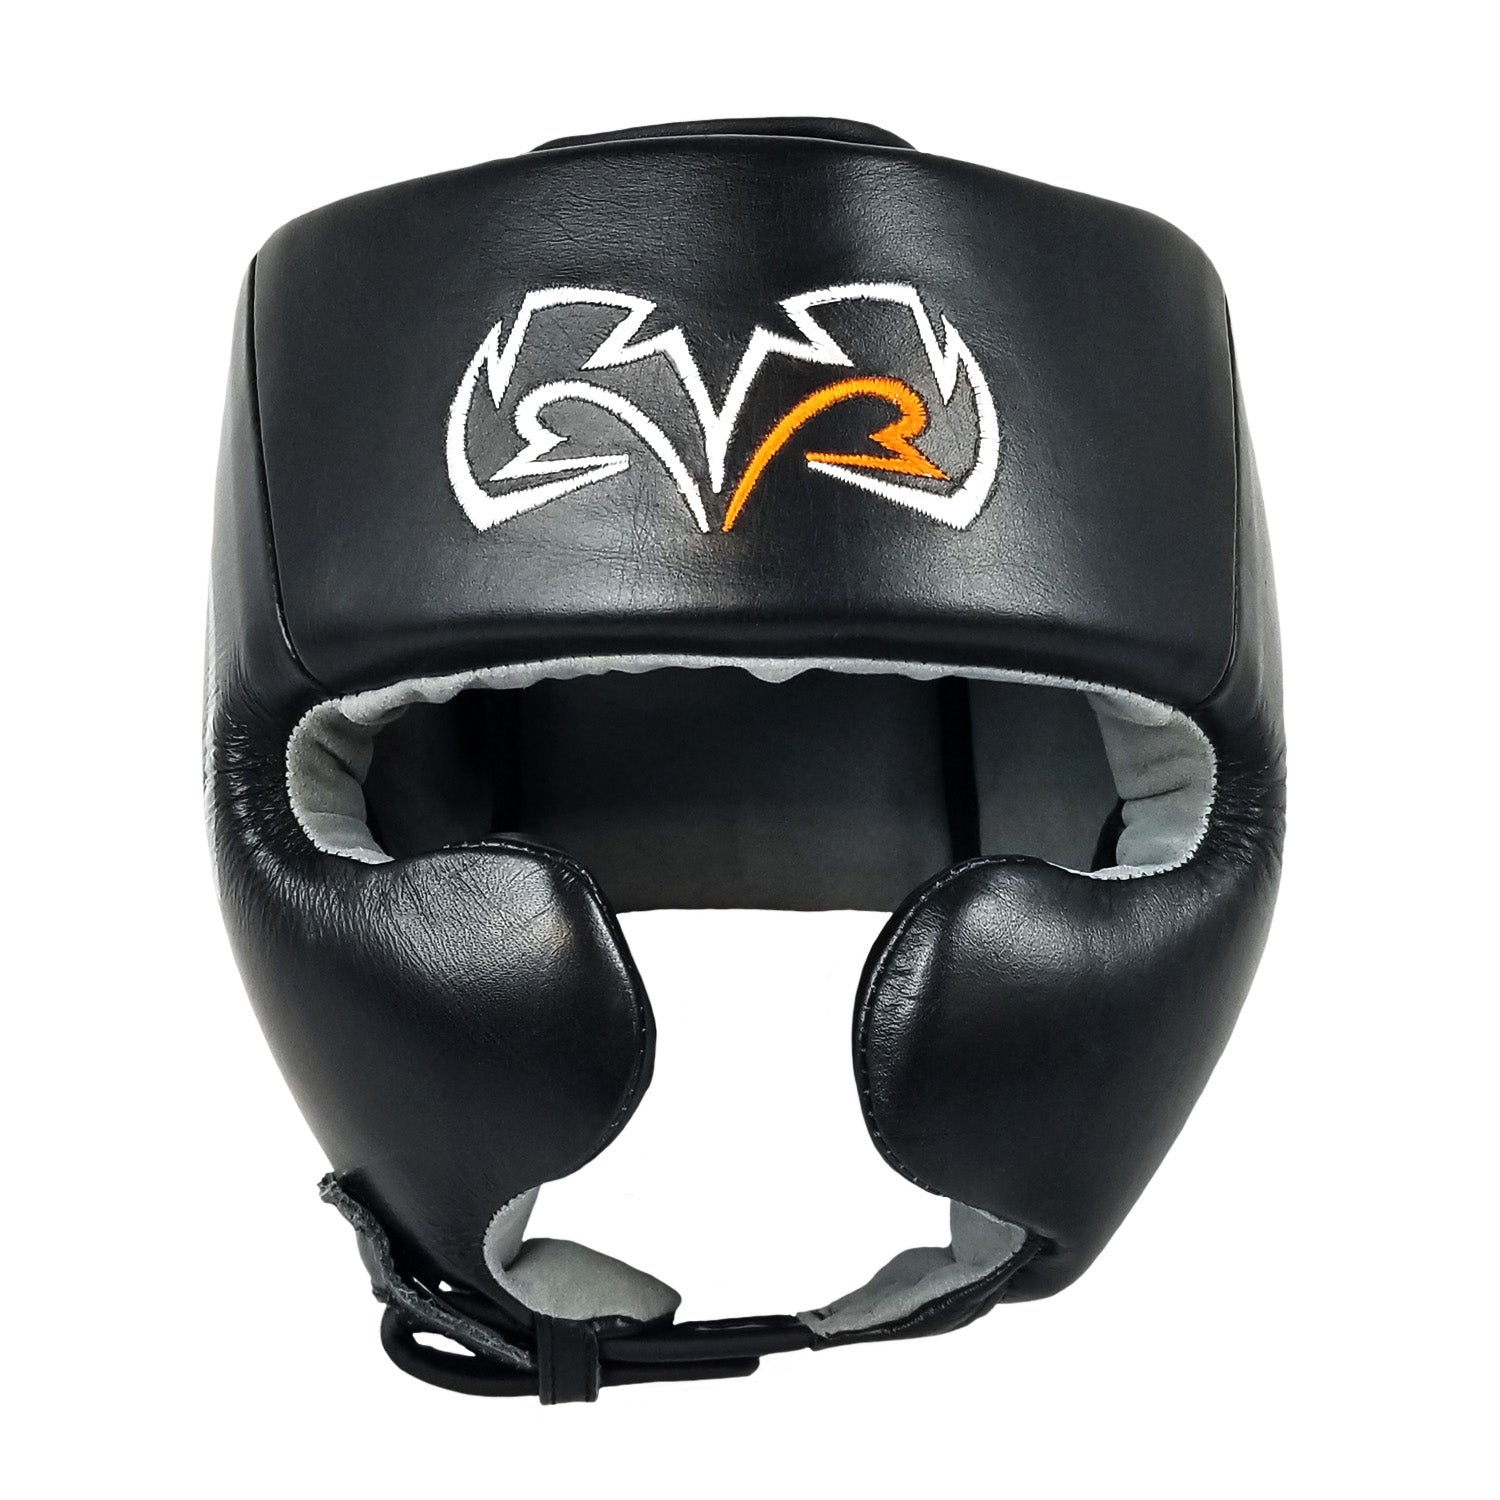 Download Rival Boxing RHG20 boxing headgear | Rival Boxing Gear USA